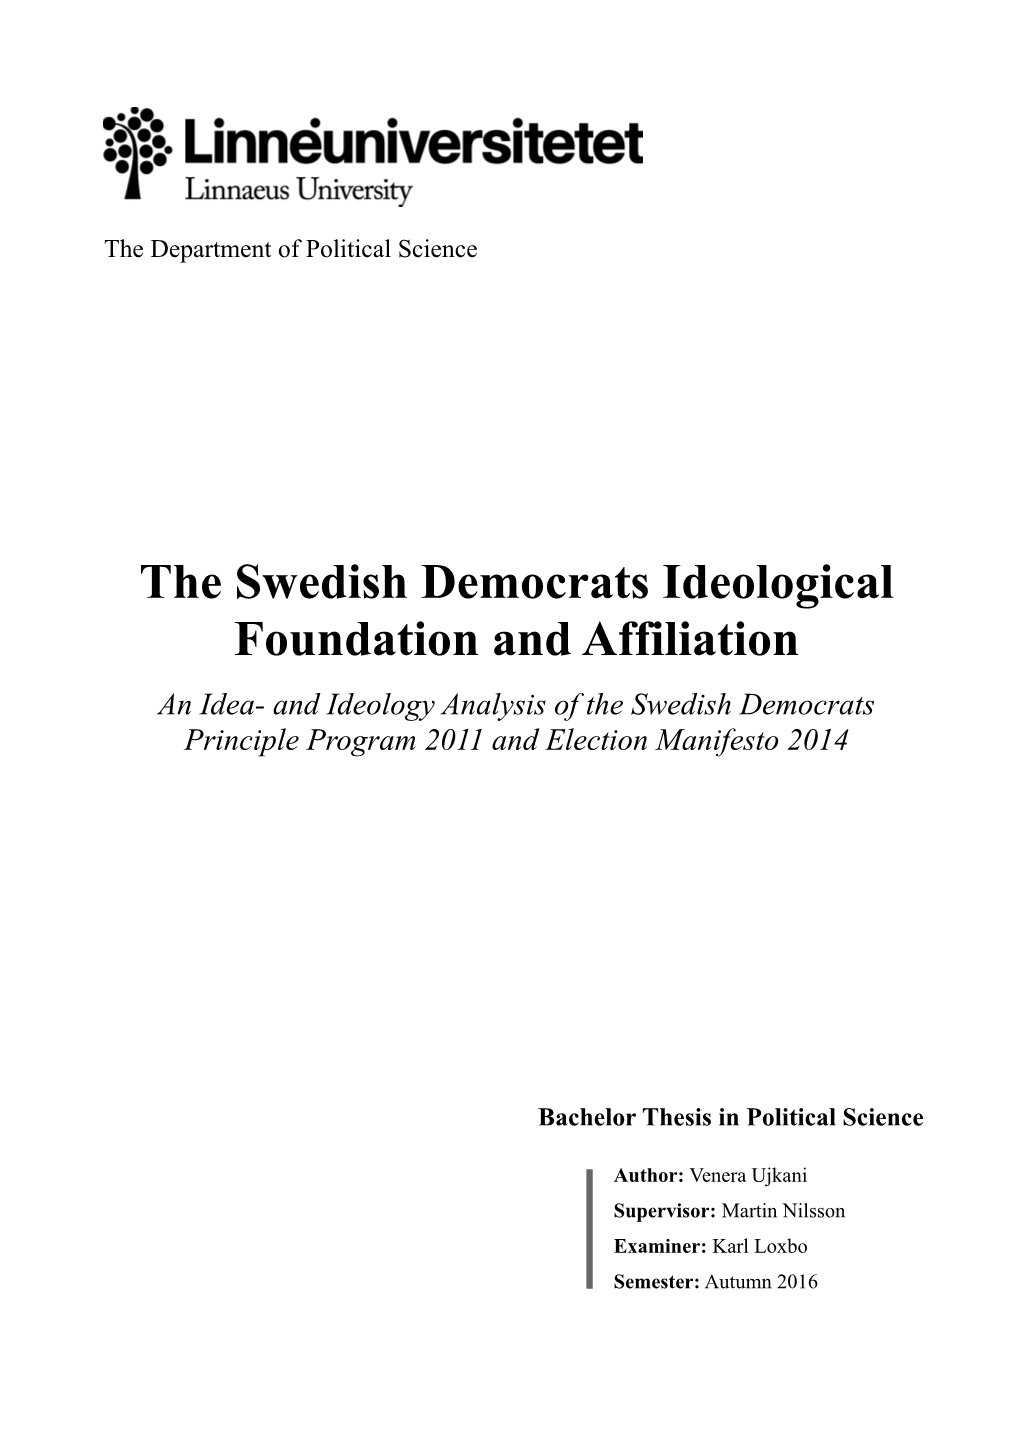 The Swedish Democrats Ideological Foundation and Affiliation